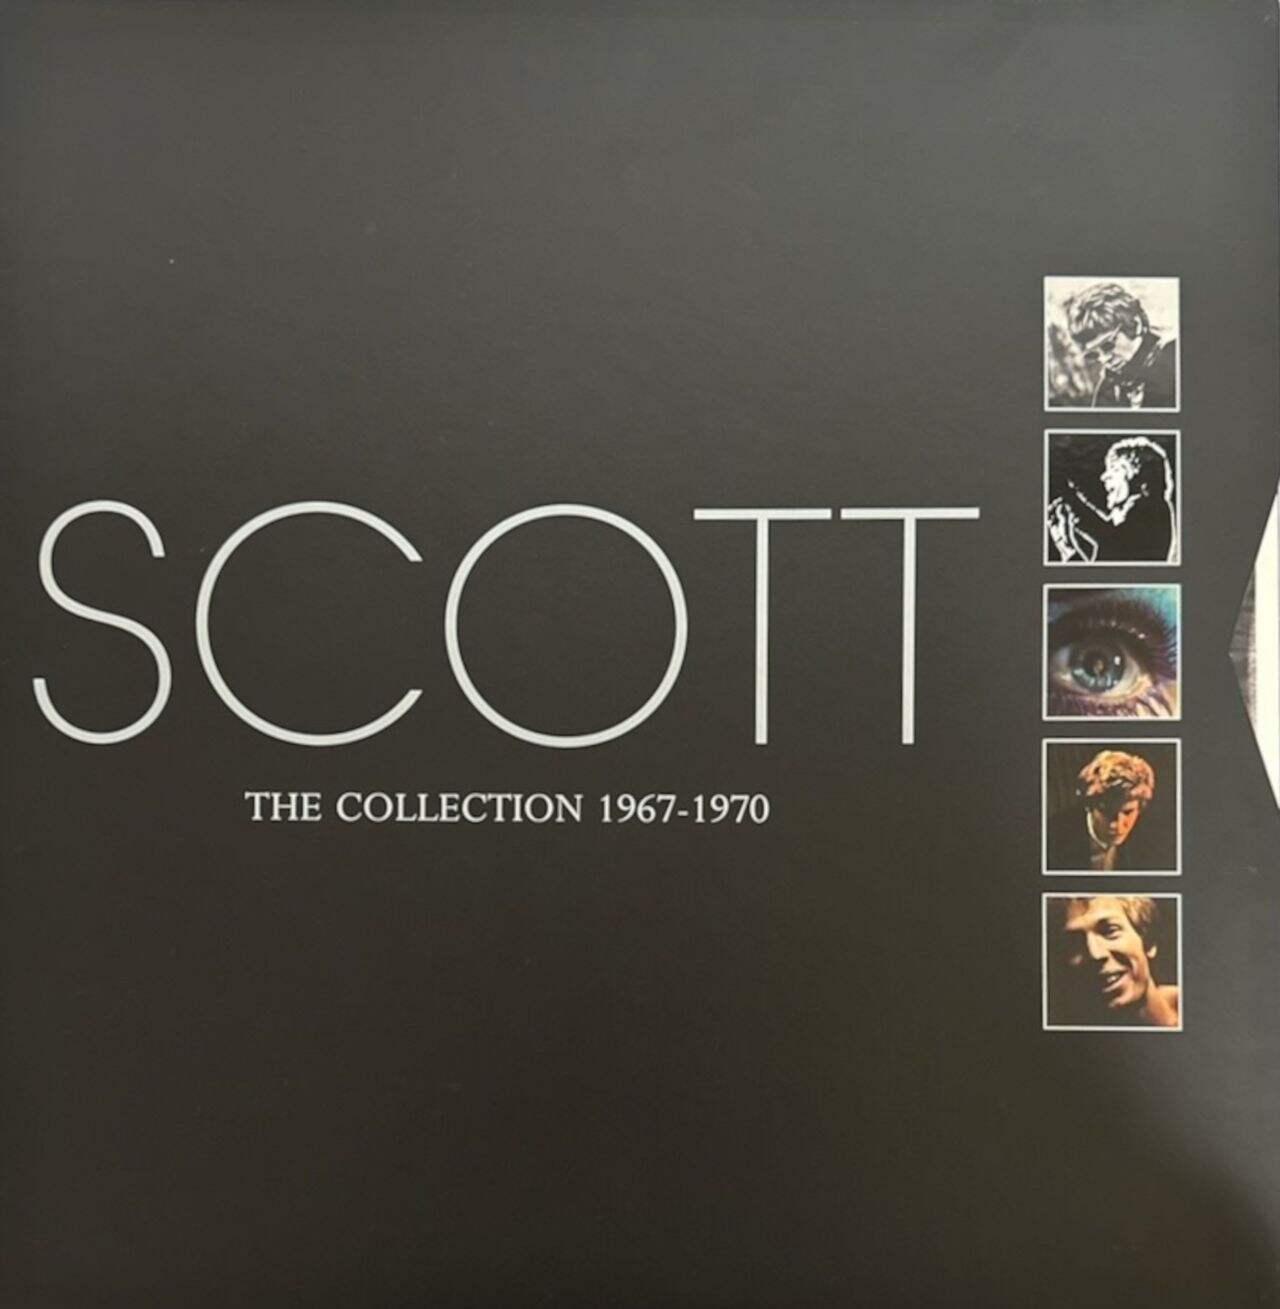 Scott Walker Scott (The Collection 1967-1970) UK 5-LP vinyl set